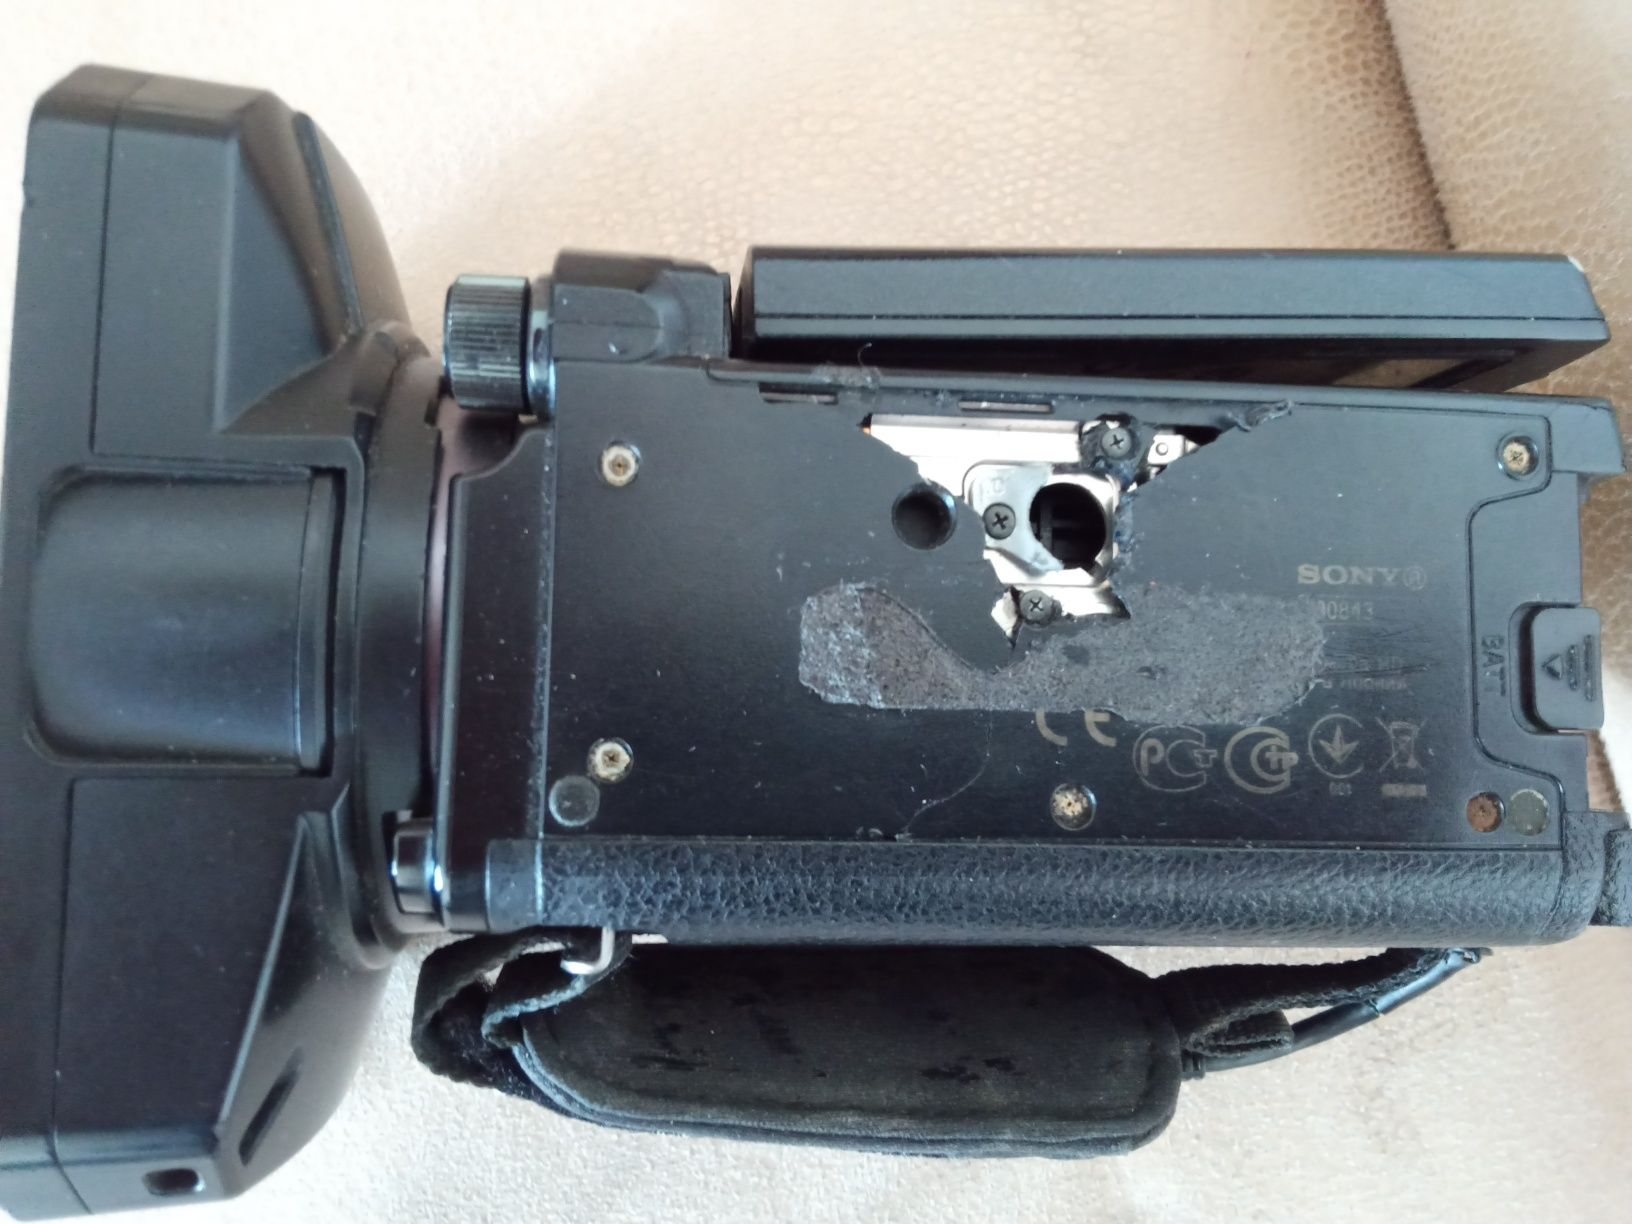 Видеокамера Sony HDR-CX740